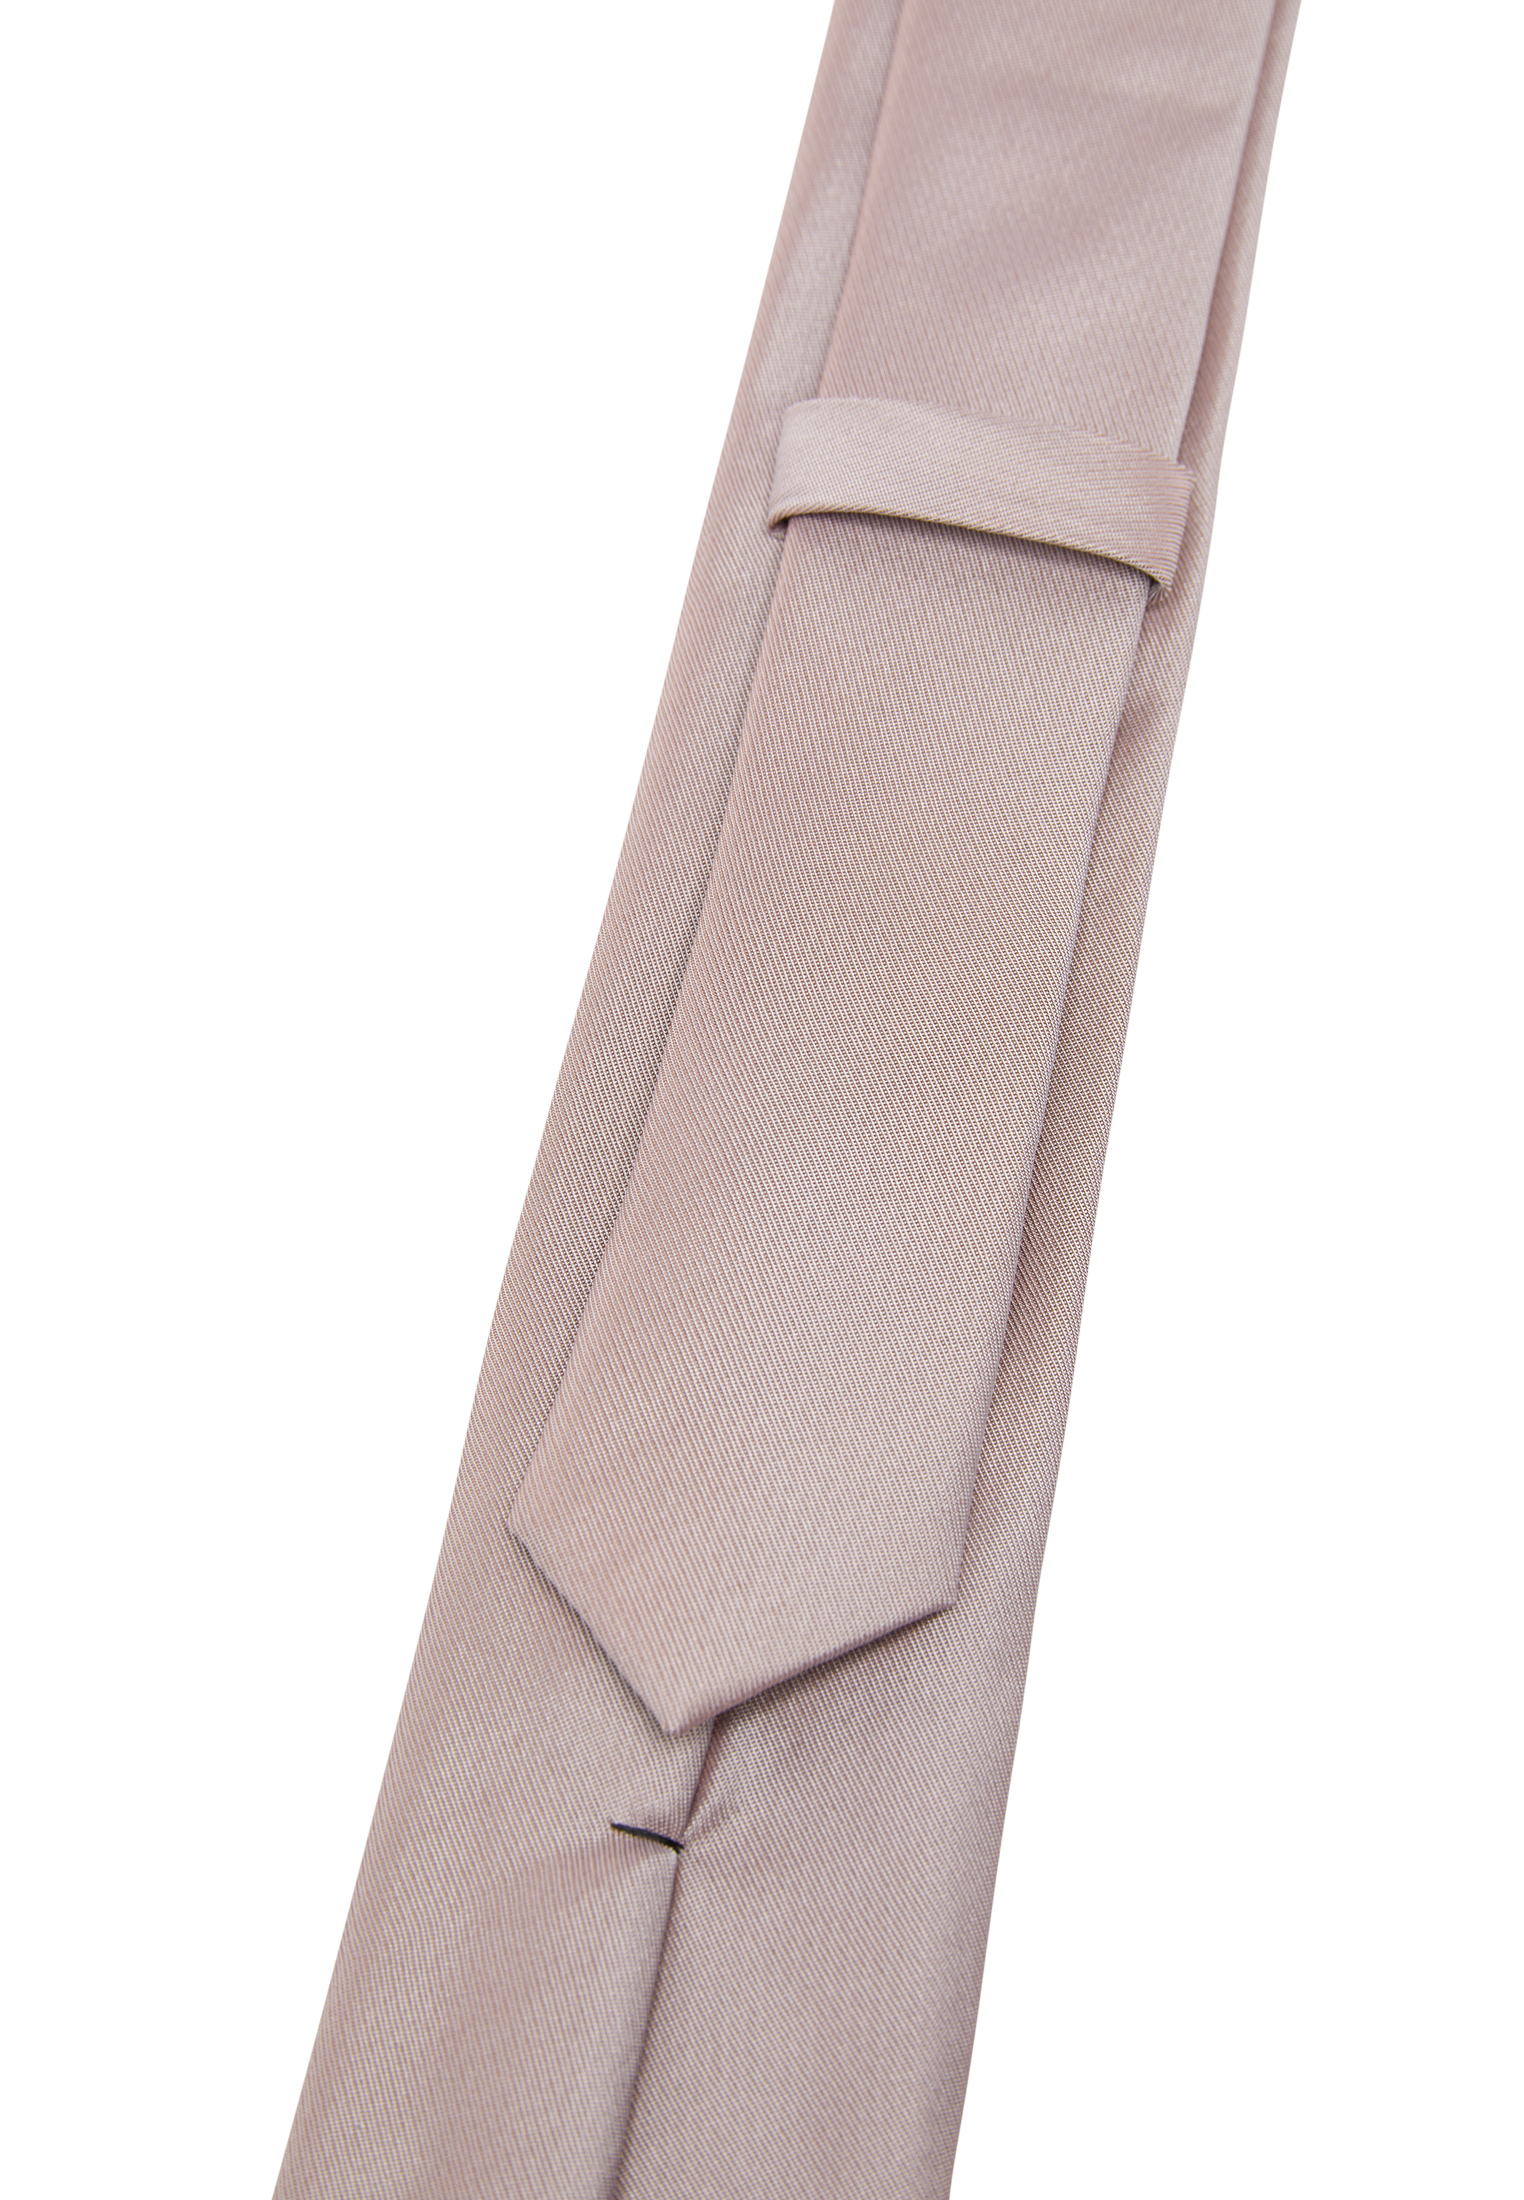 | Krawatte | silber 1AC02085-03-11-142 in 142 | unifarben silber